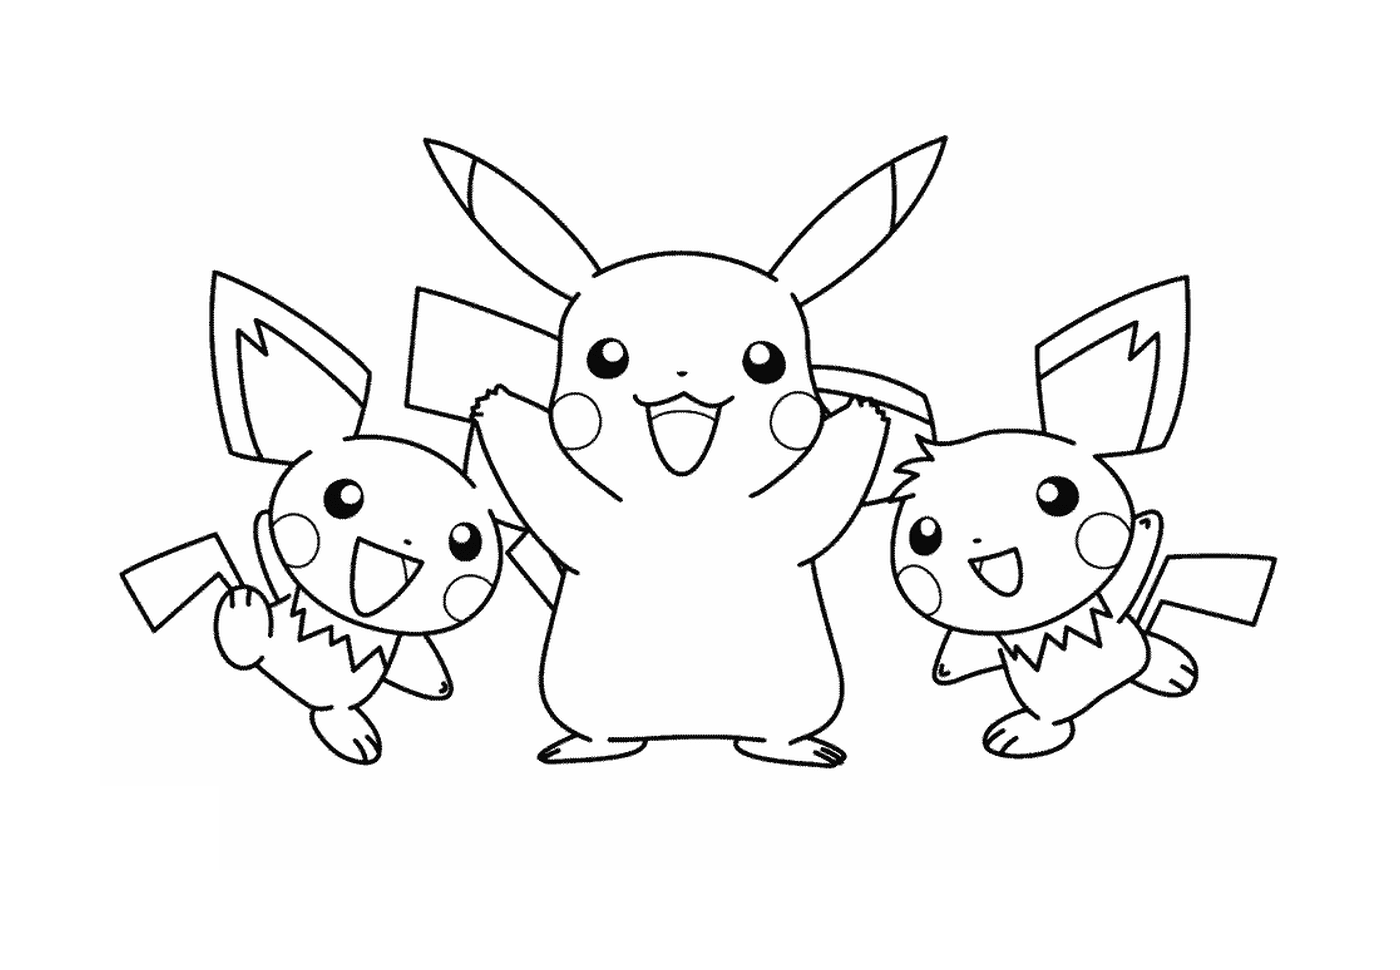  Three Pikachu characters together 